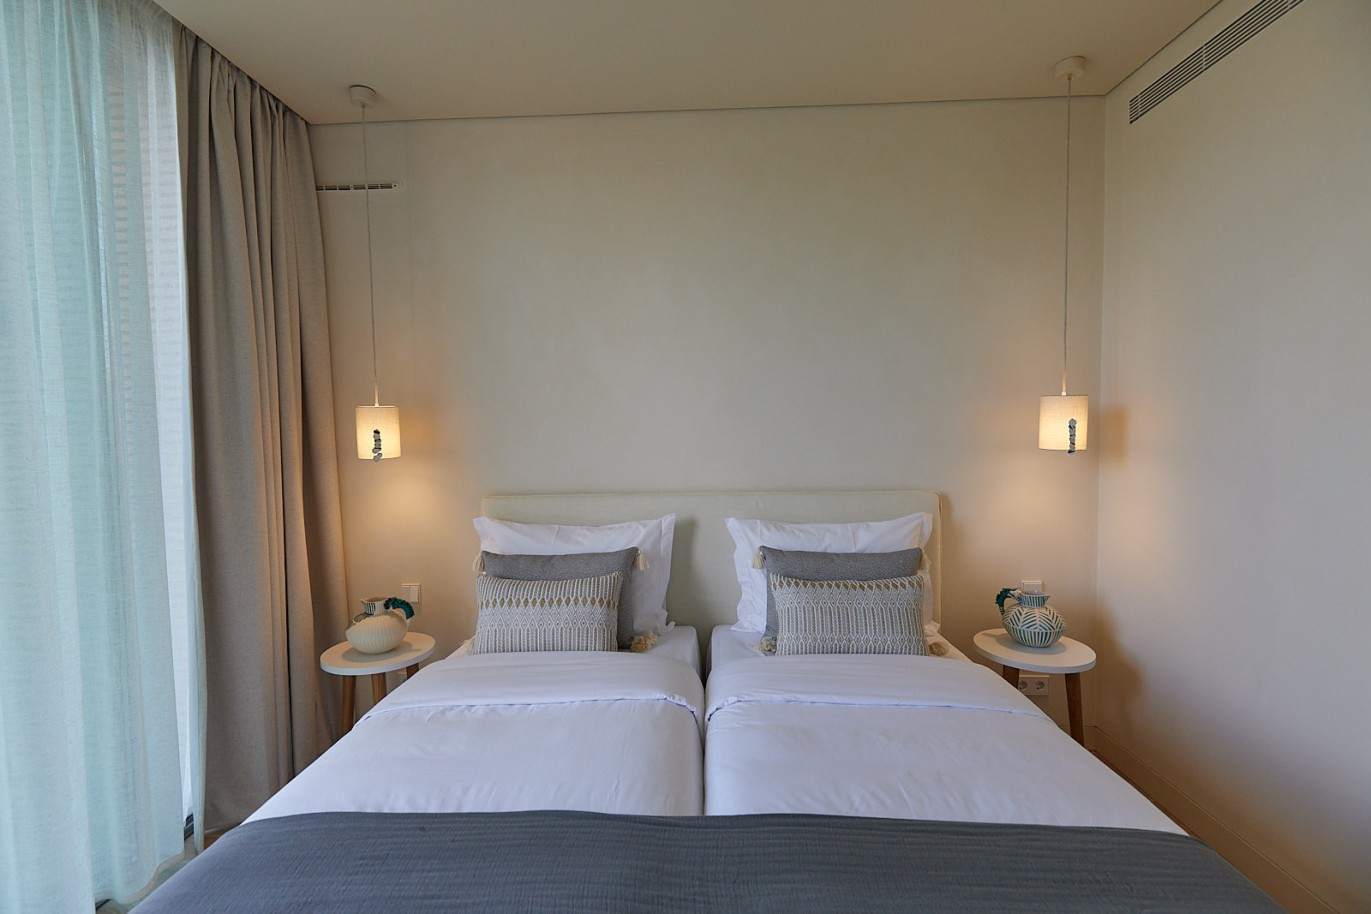 3 bedroom apartment in resort, for sale in Porches, Algarve_230718